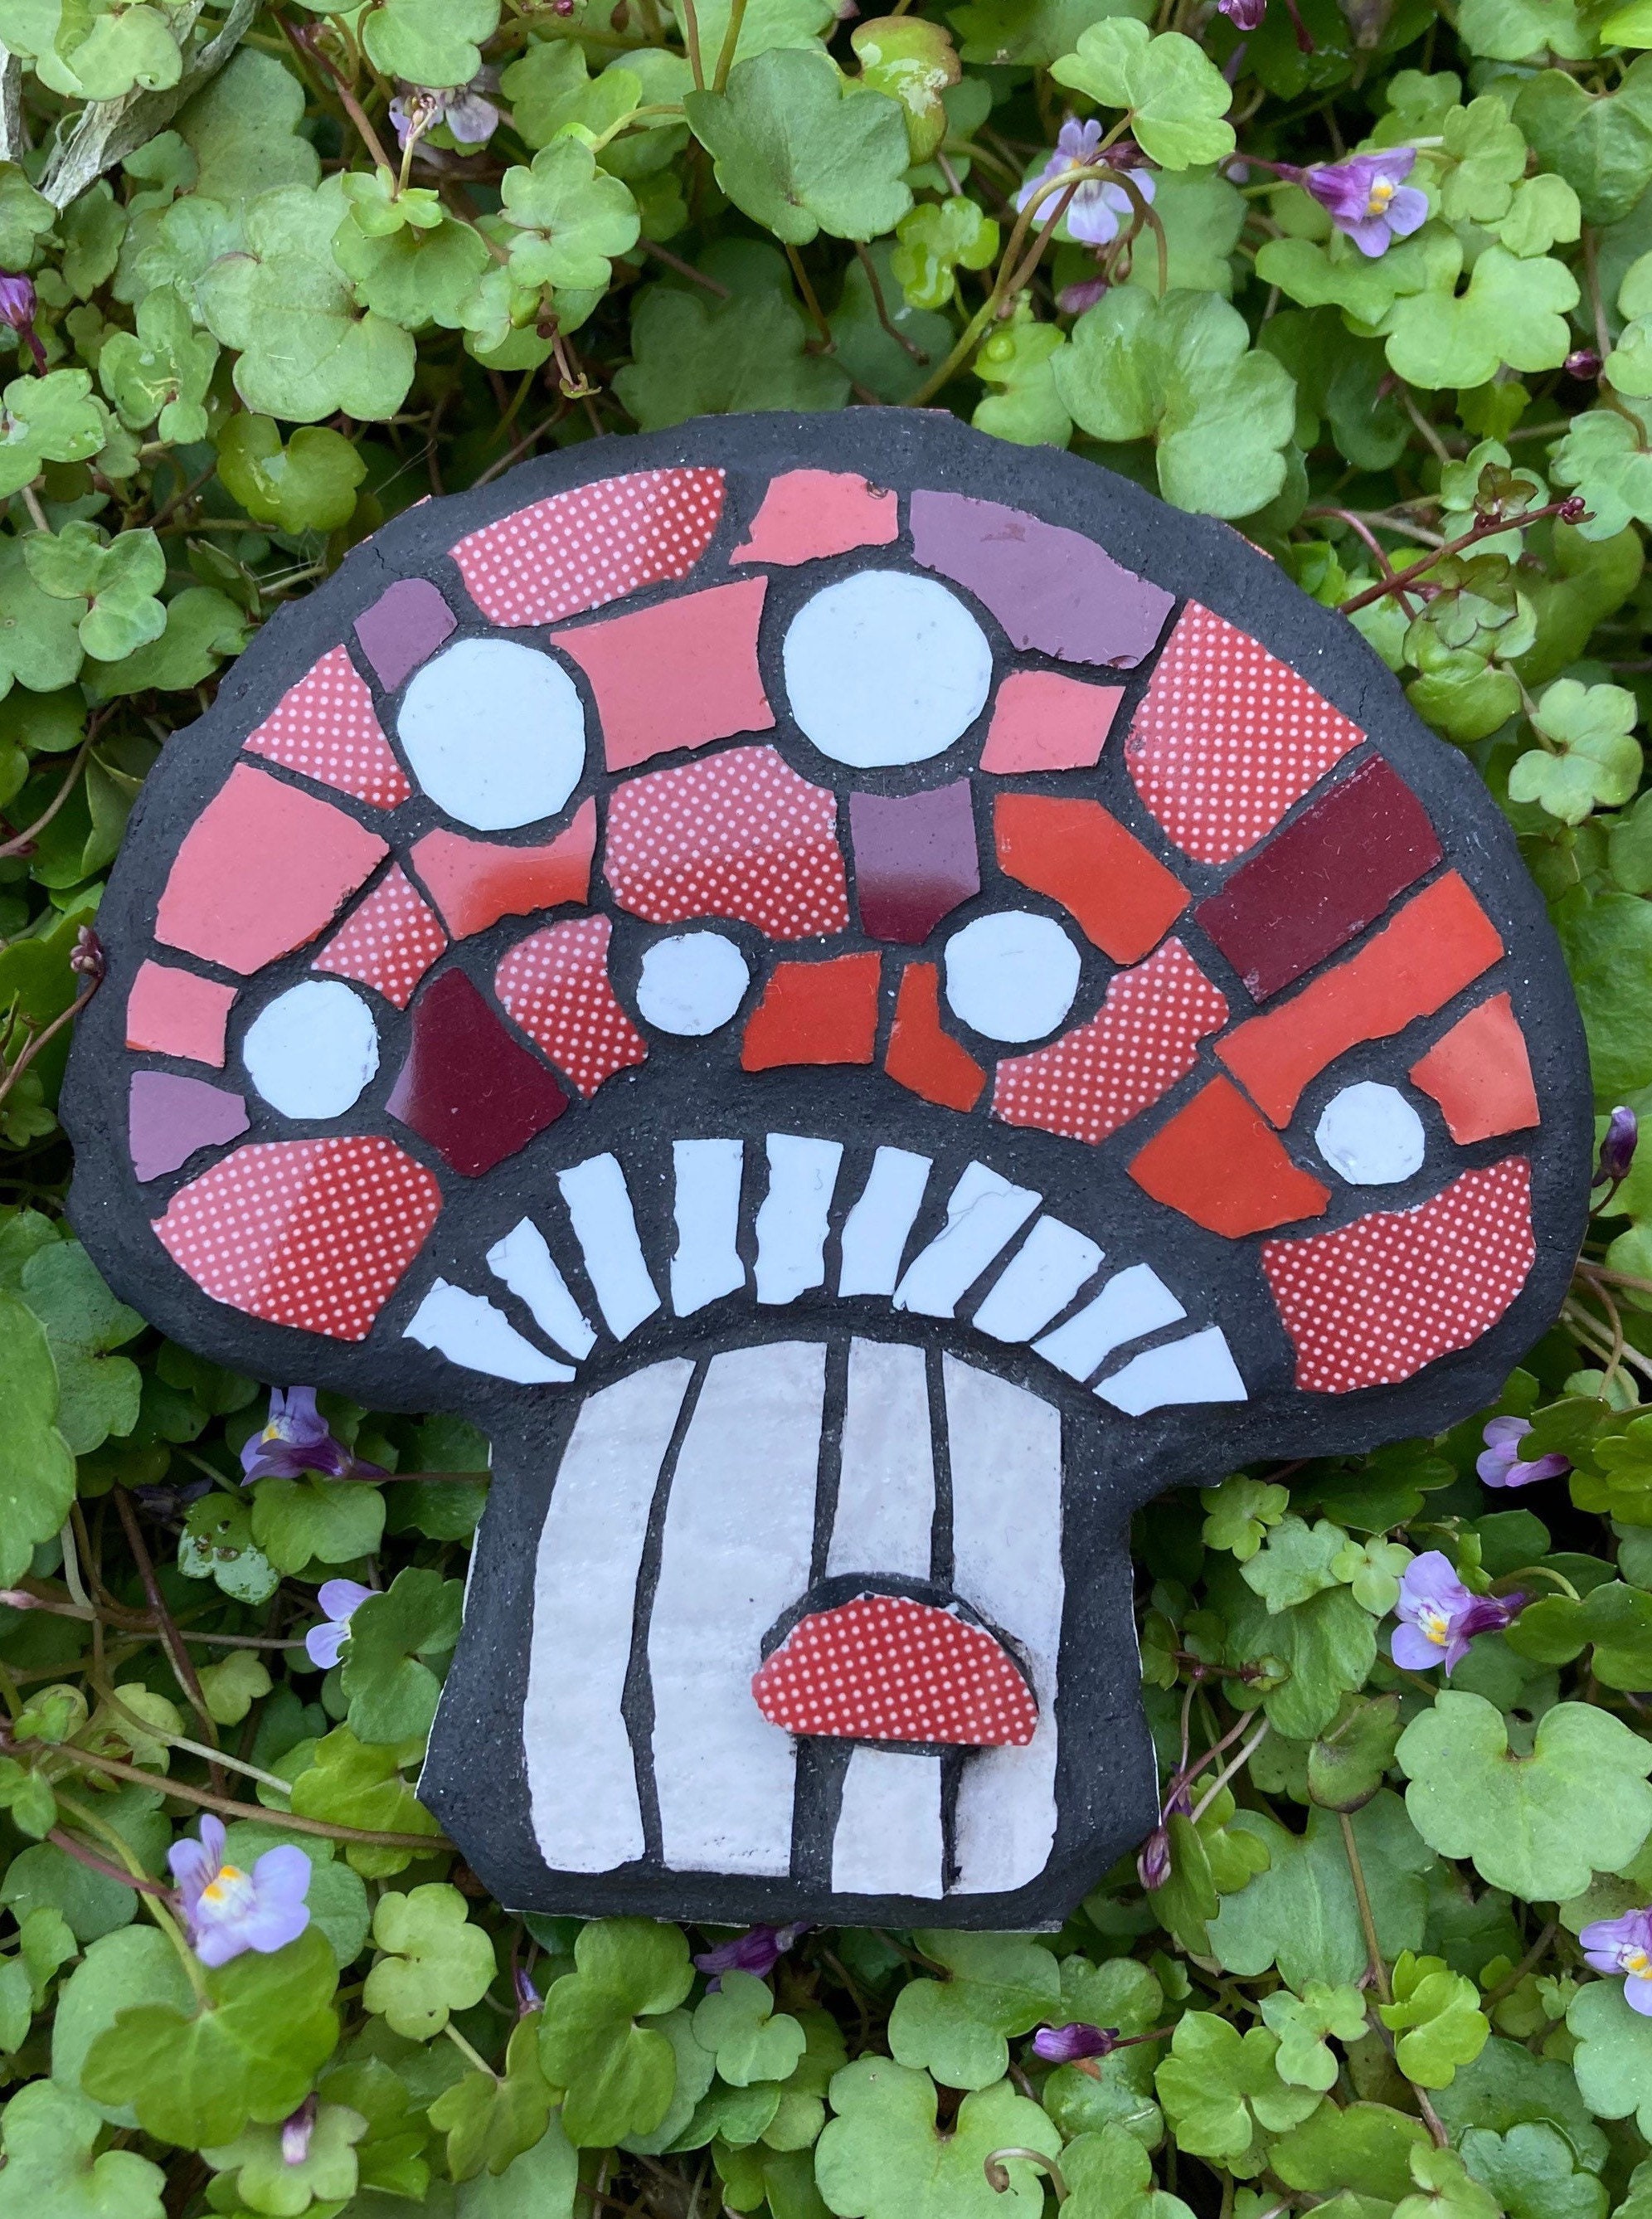 Torn Construction Paper Mosaic Mushroom Art